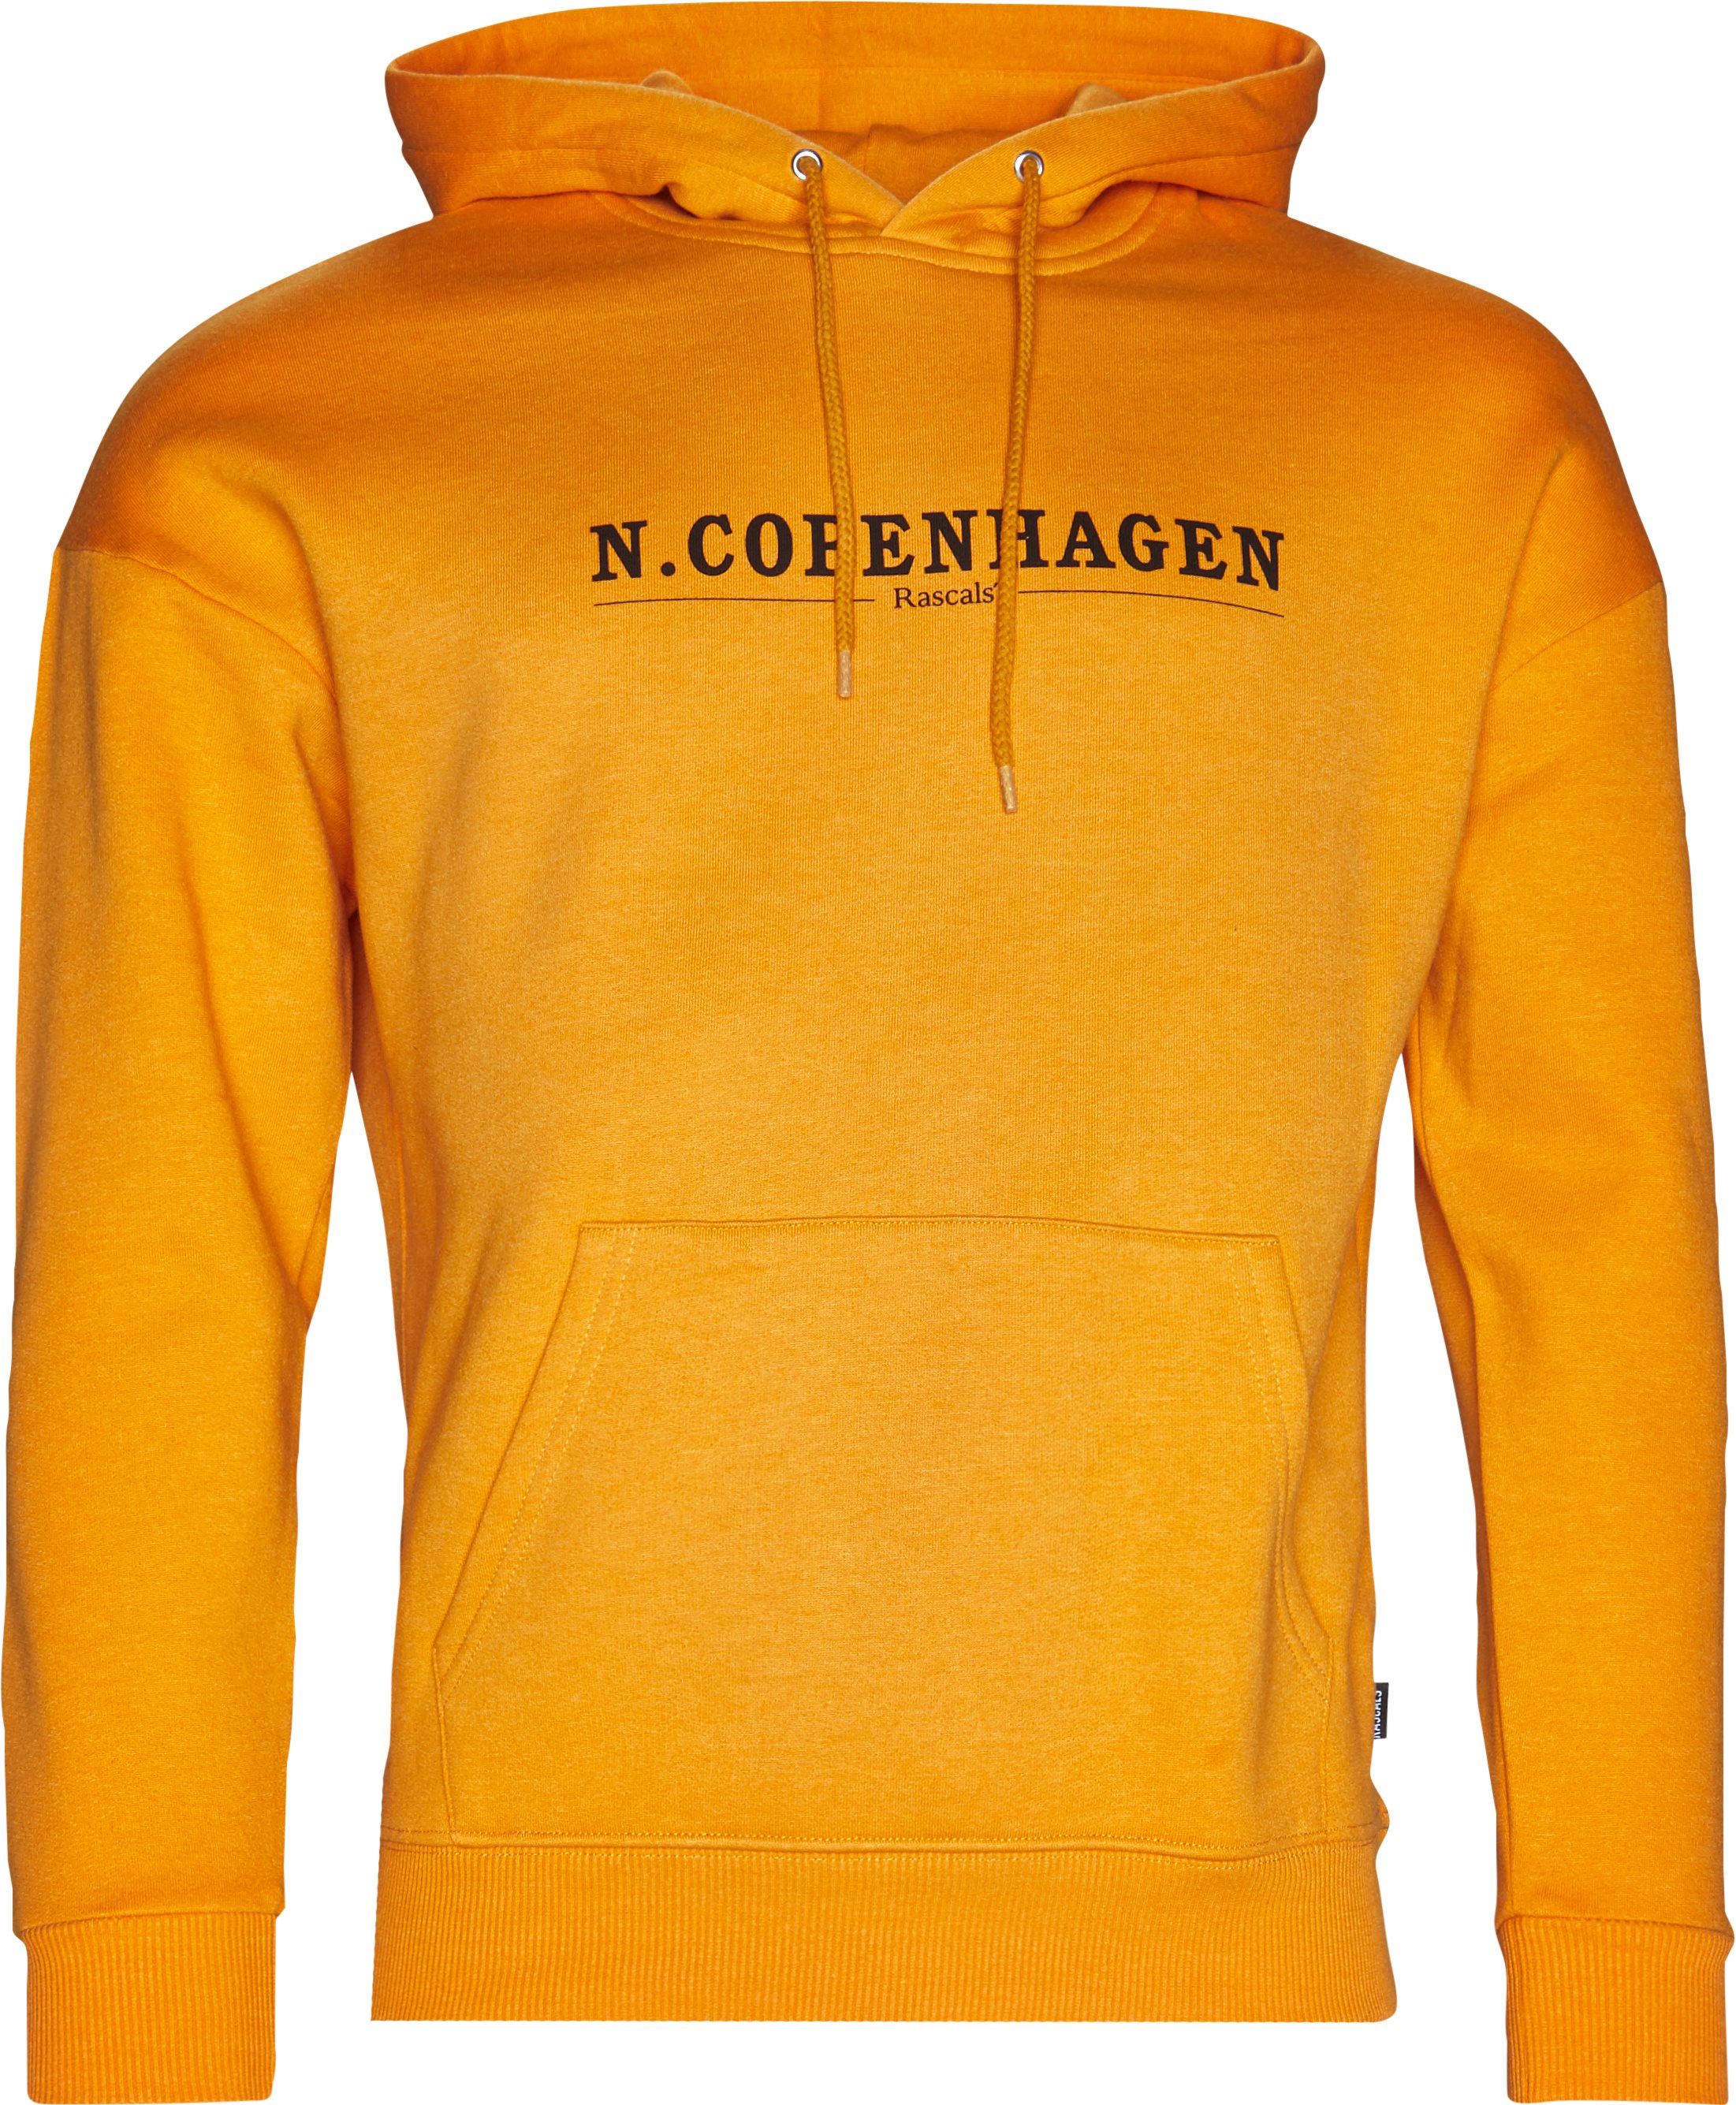 utilfredsstillende tapperhed Belønning COPENHAGEN HOODY. Sweatshirts ORANGE fra Rascals 299 DKK